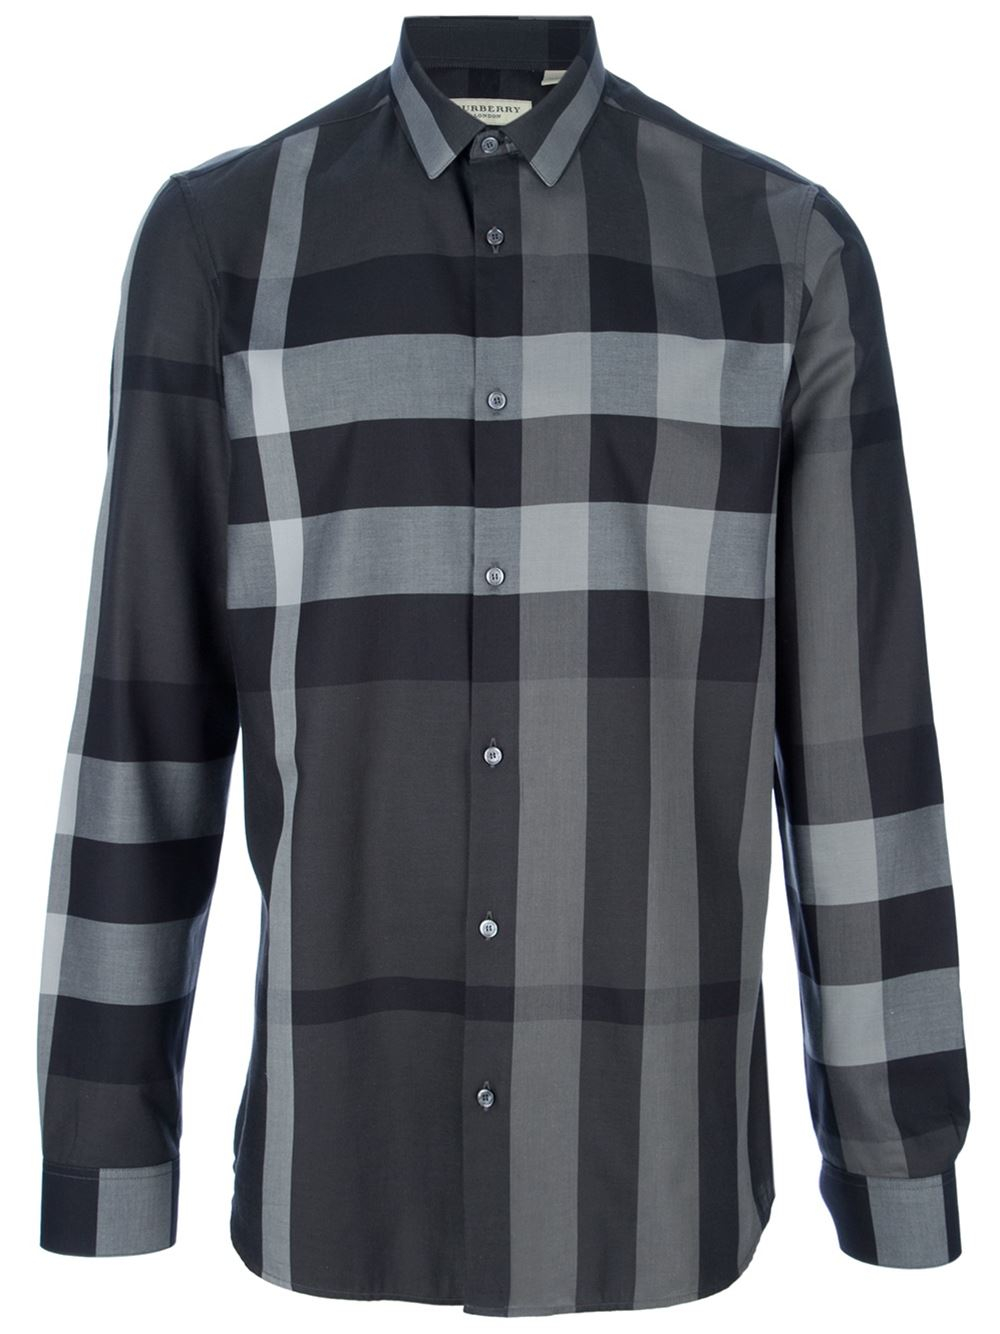 Burberry Pembury Shirt in Black for Men - Lyst